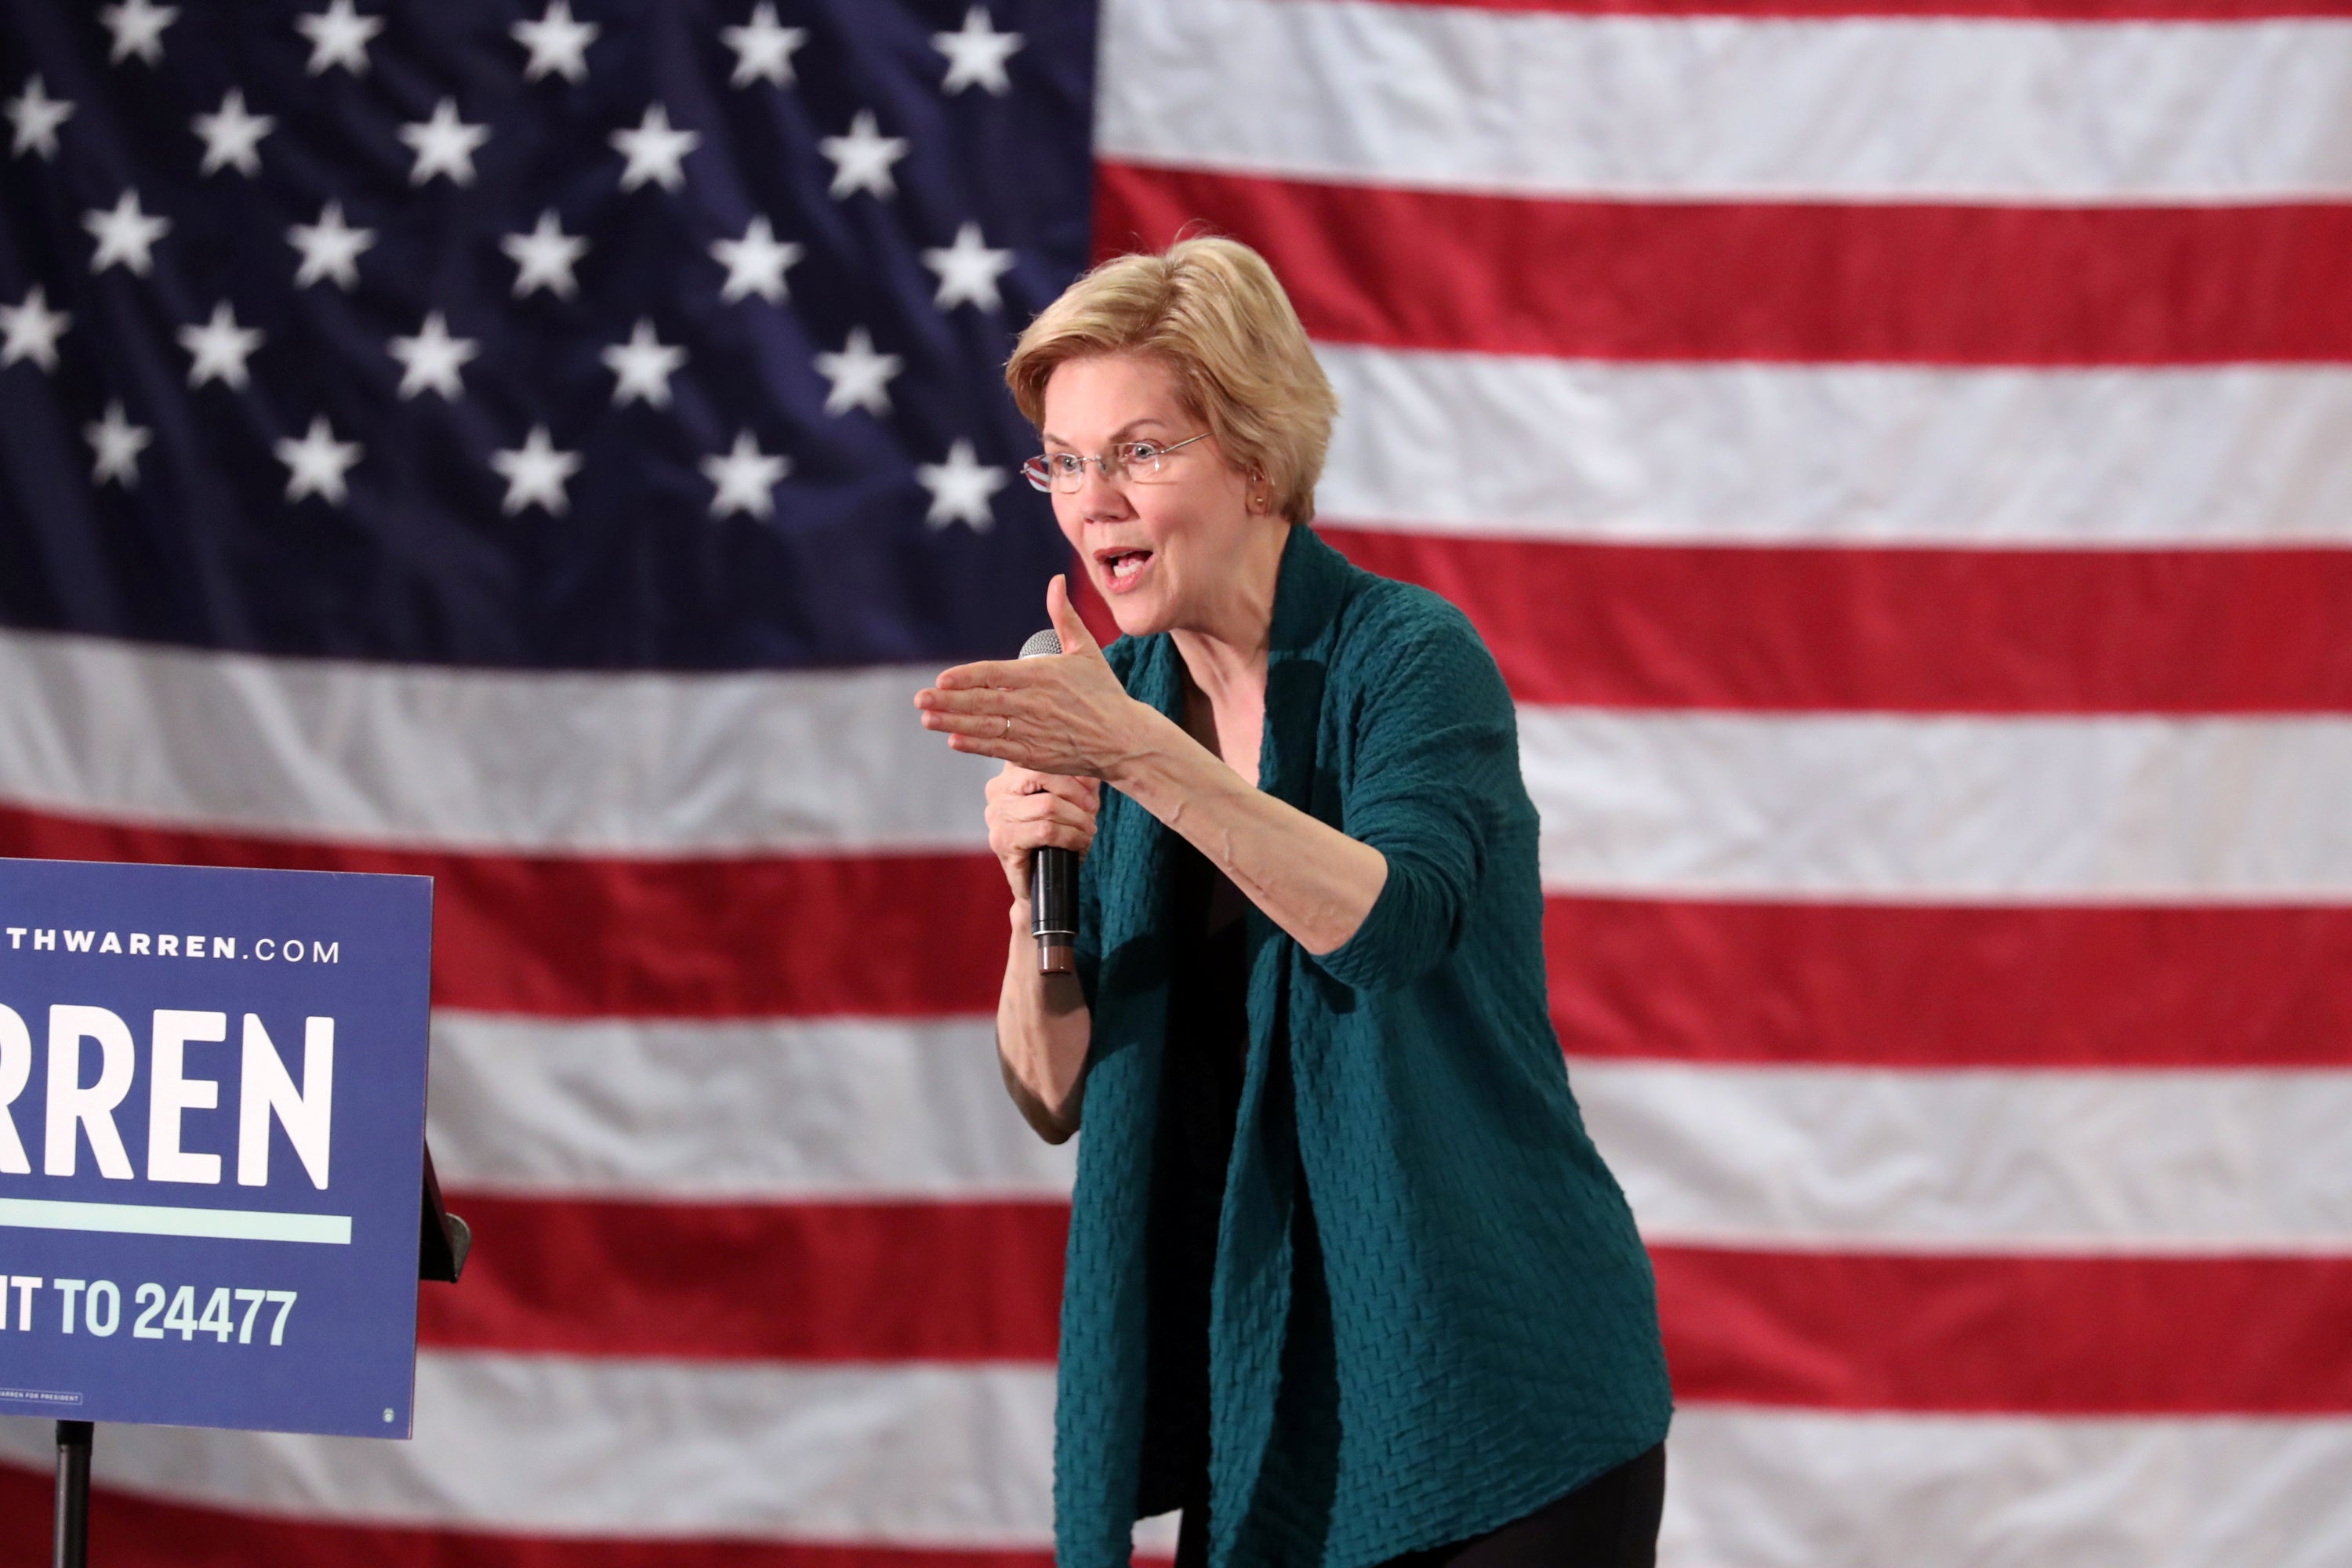 Warren, holding a microphone, speaks against an American flag backdrop.